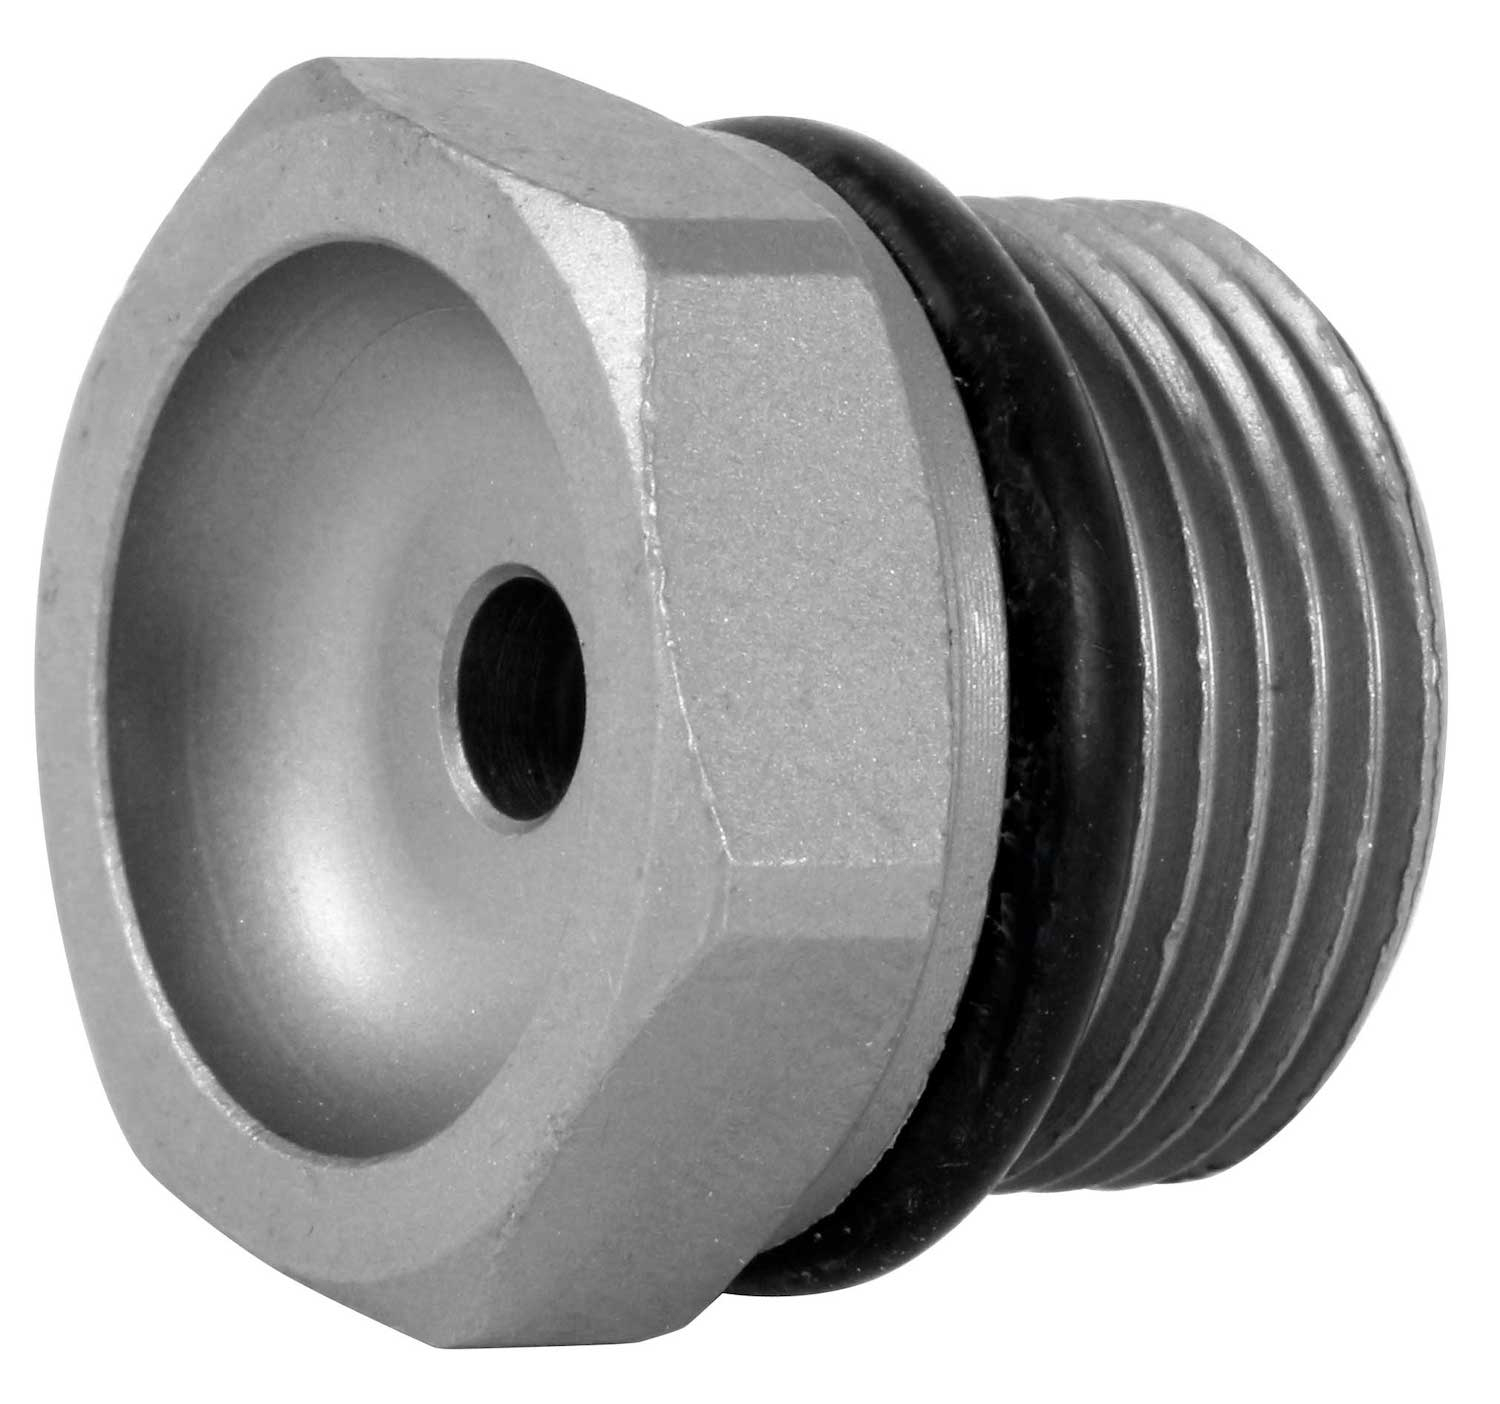 Buse inox pour lance hydro-balayage - calibre 2,3 mm